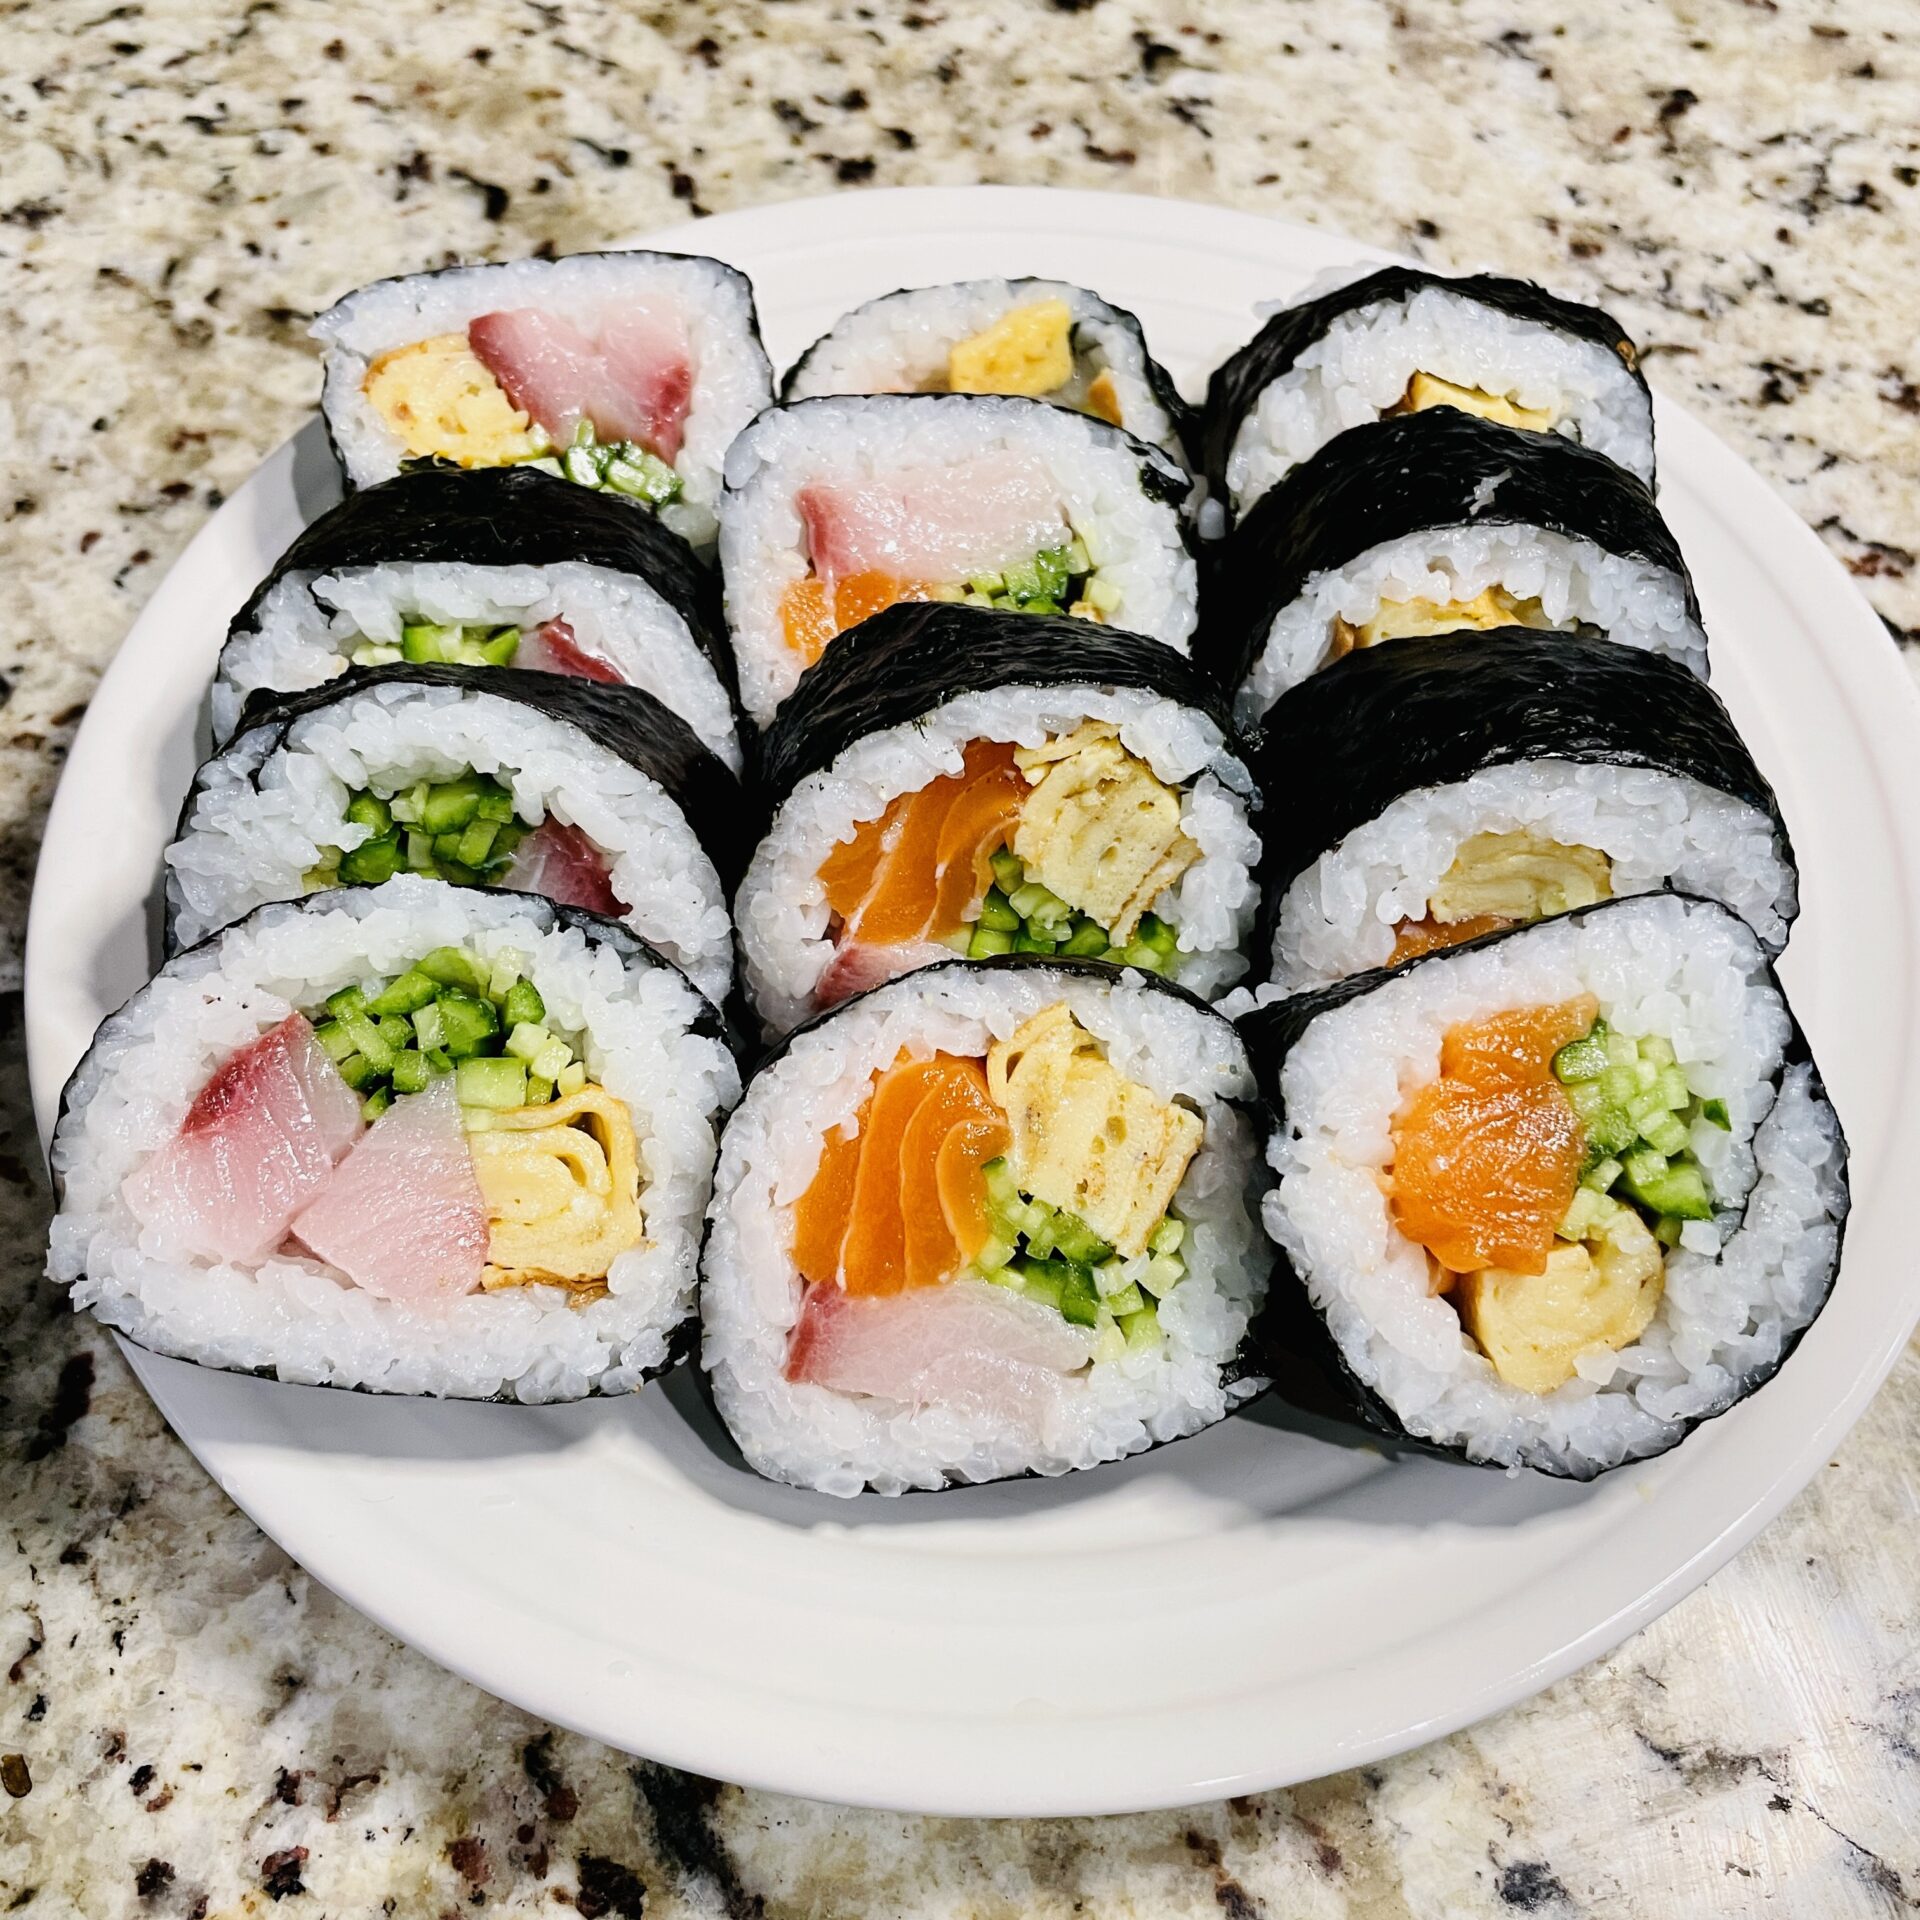 How to Make Homemade Sushi Rolls